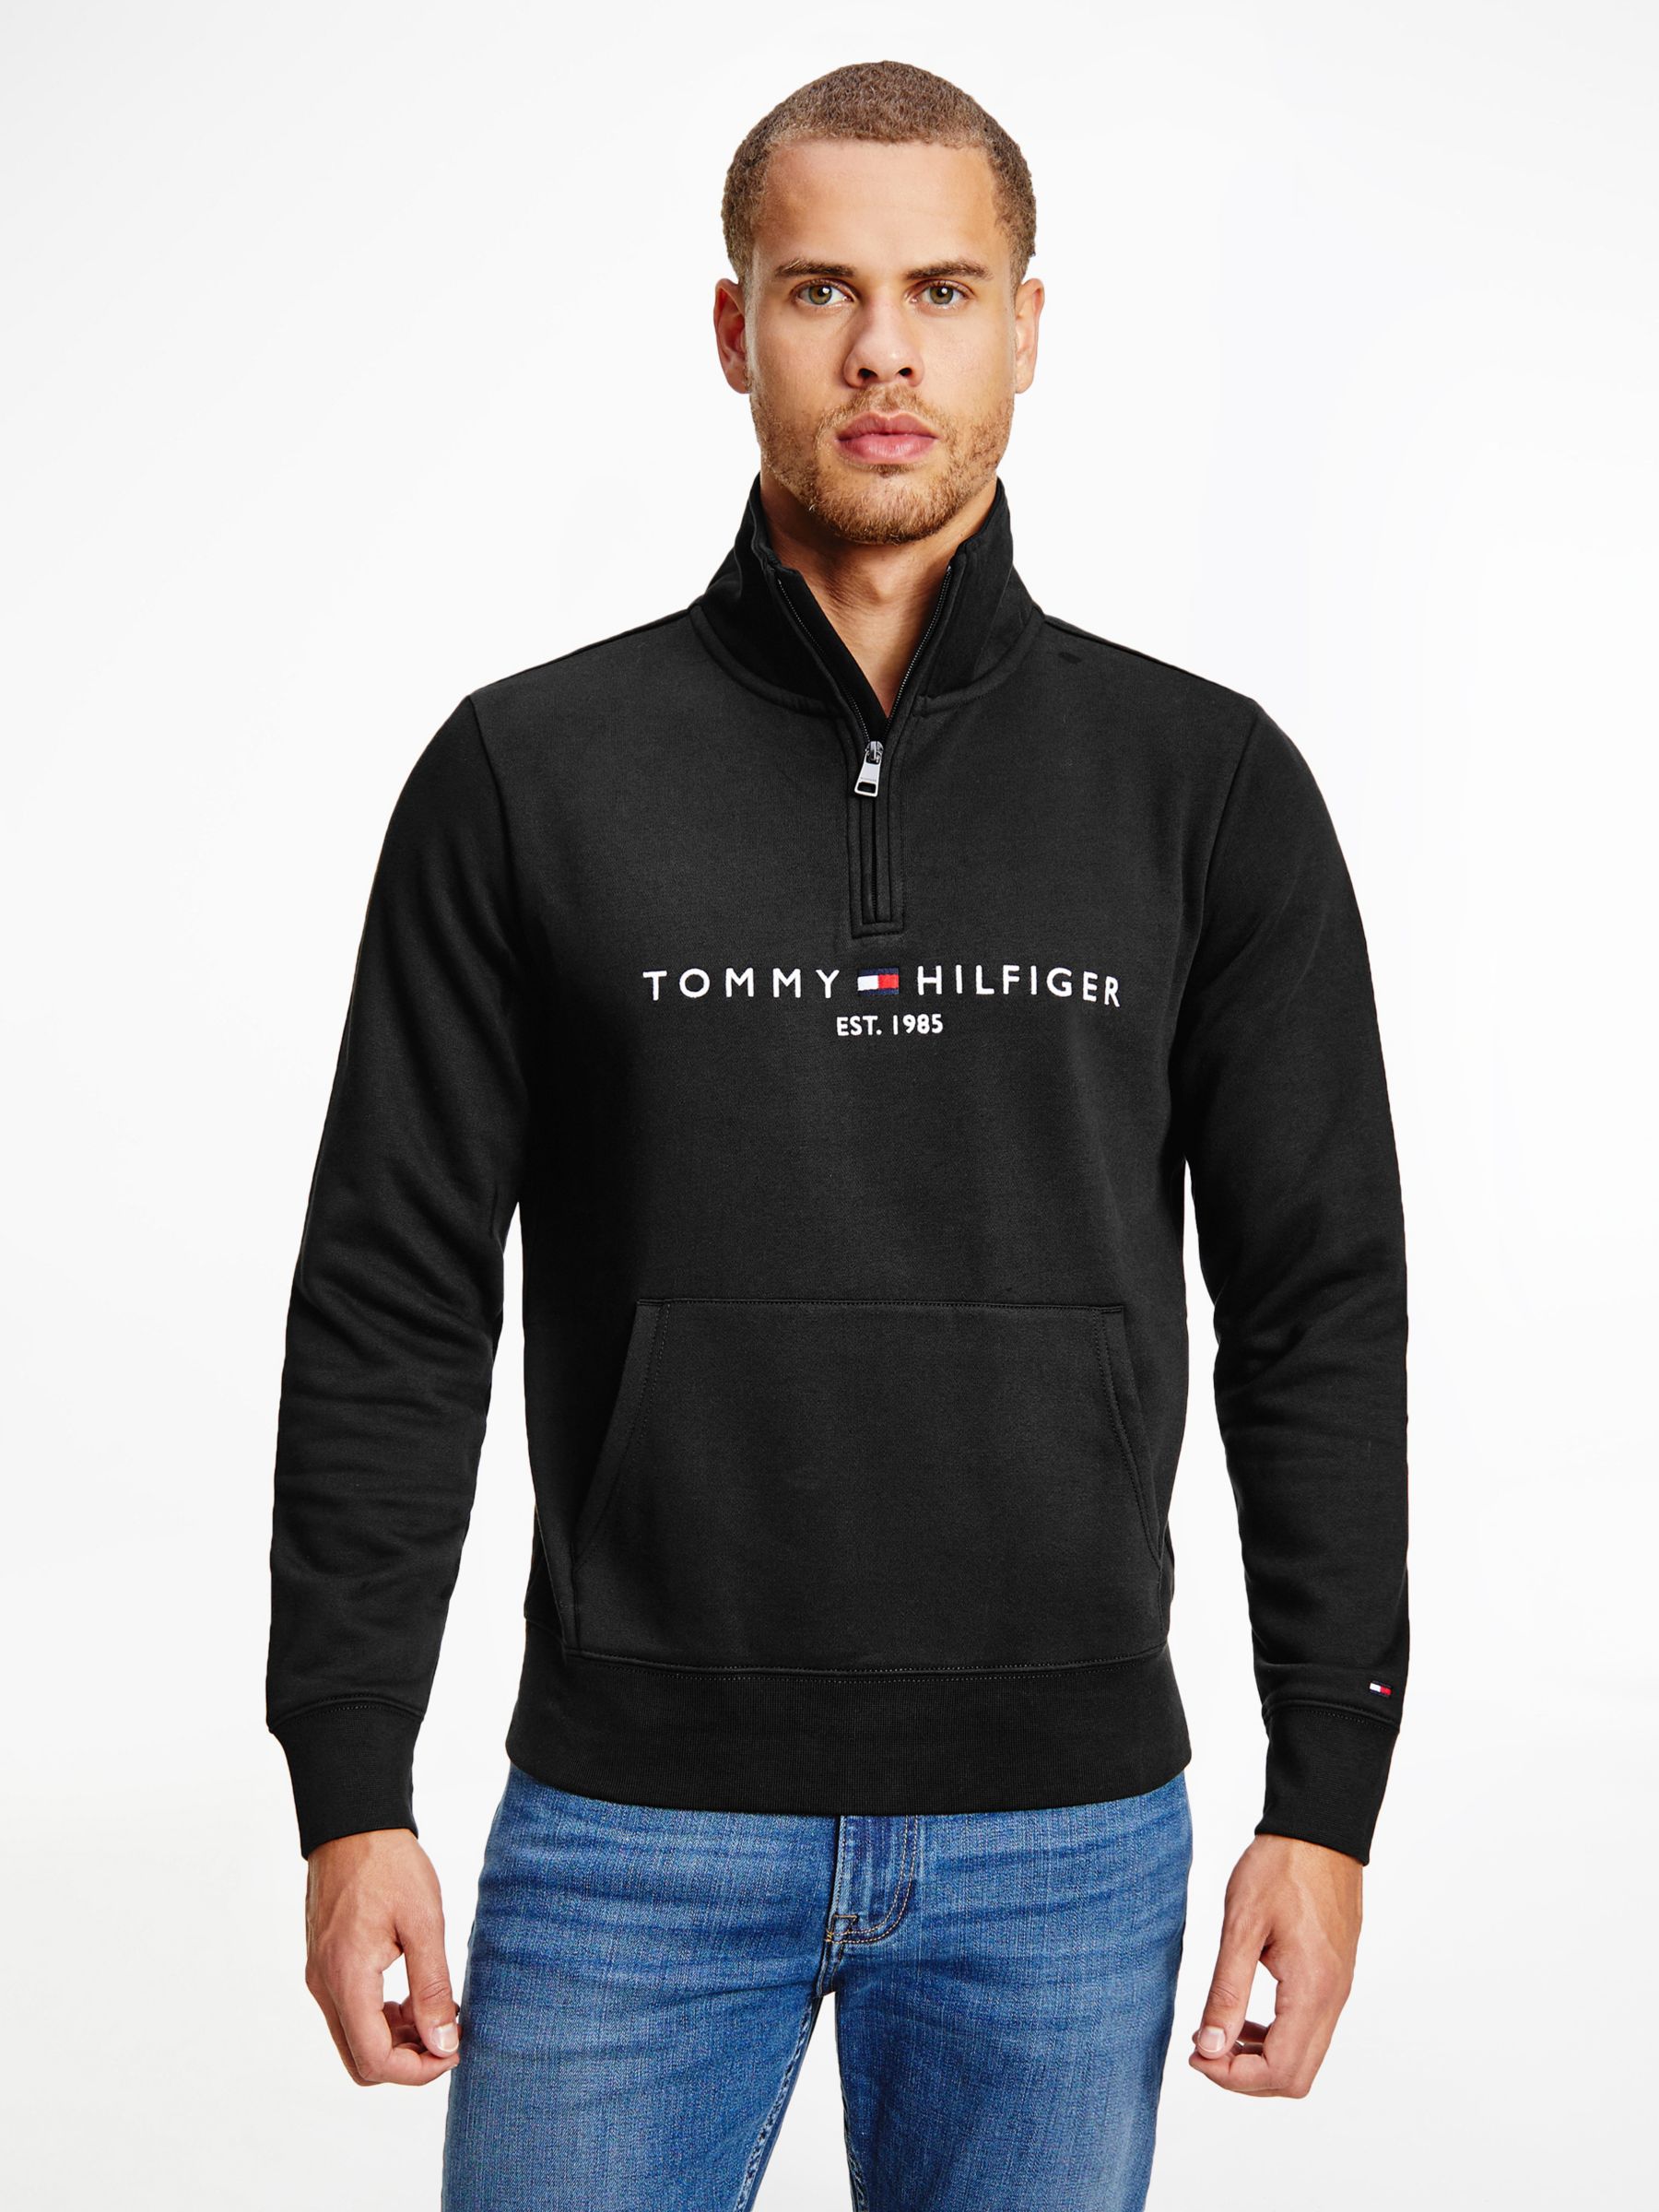 Tommy Hilfiger Mock Neck Sweatshirt, Black, S